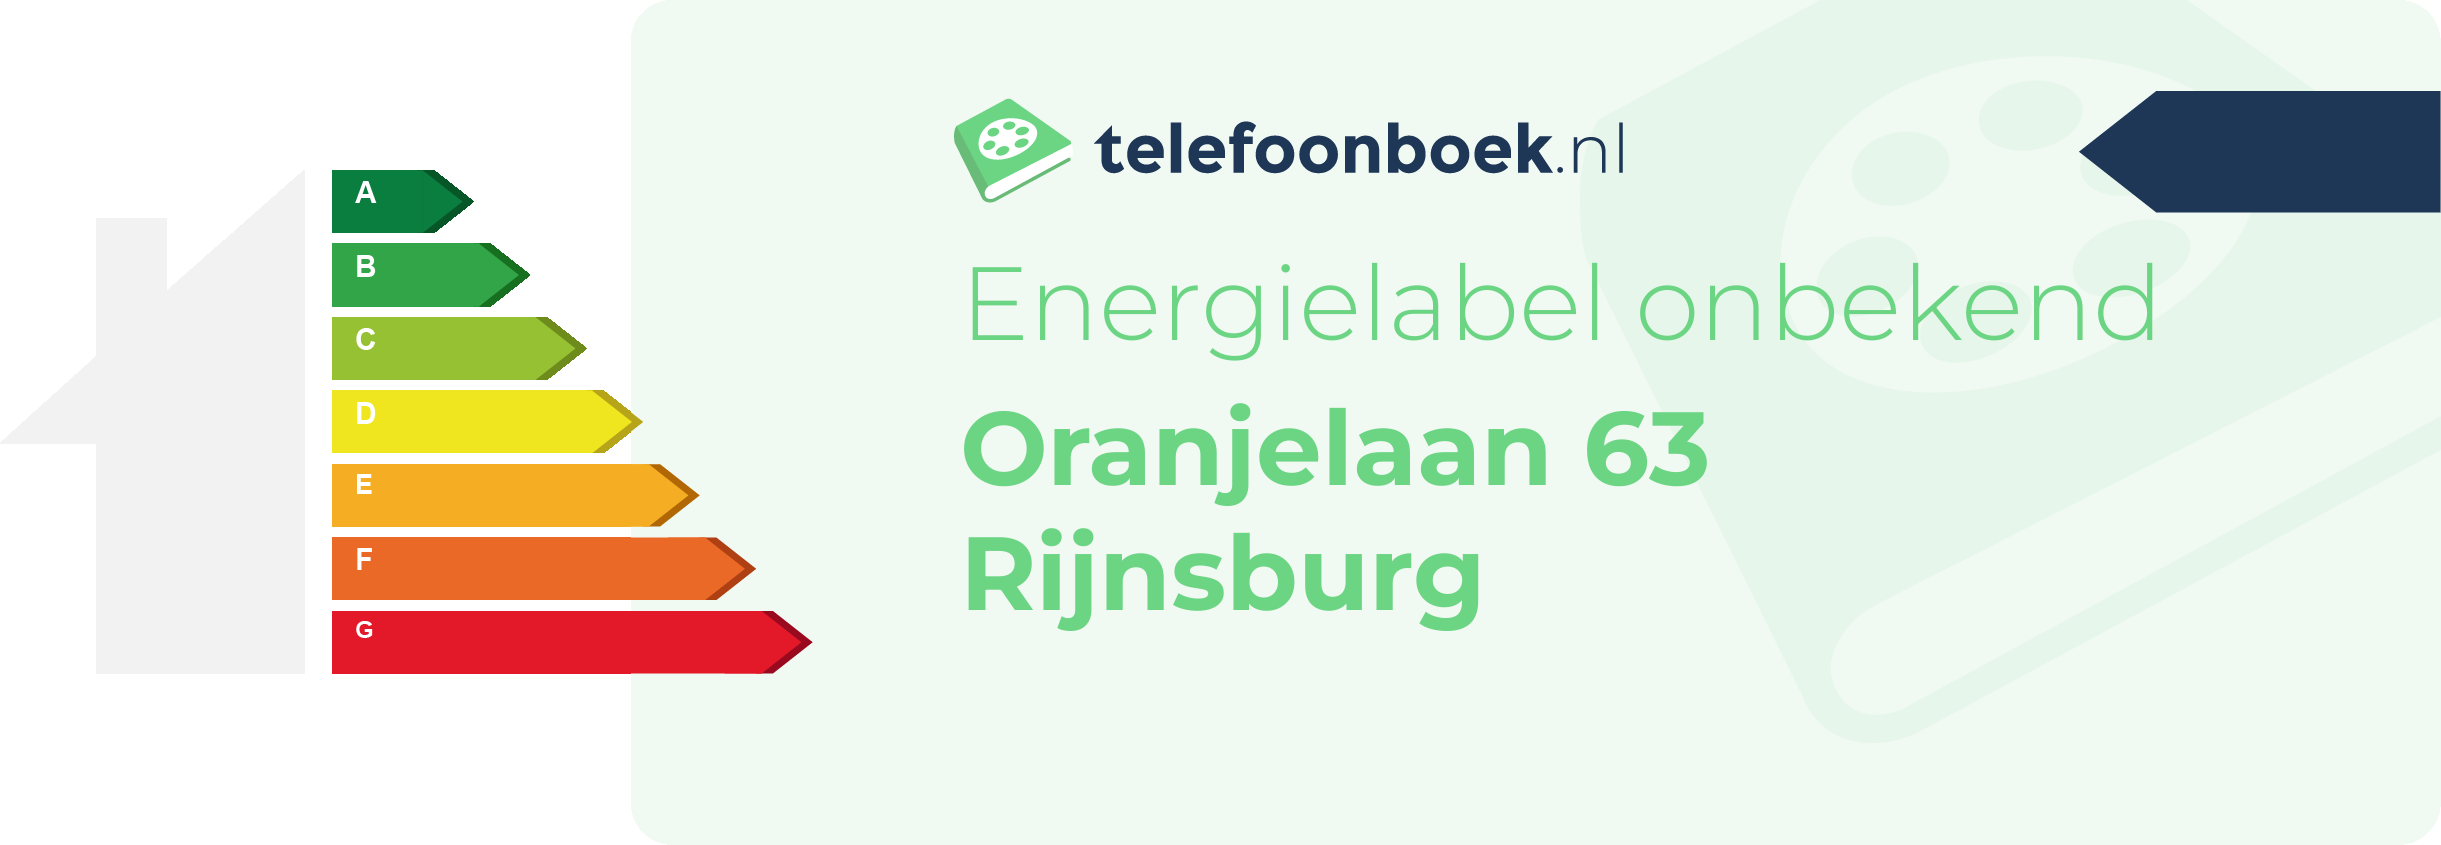 Energielabel Oranjelaan 63 Rijnsburg